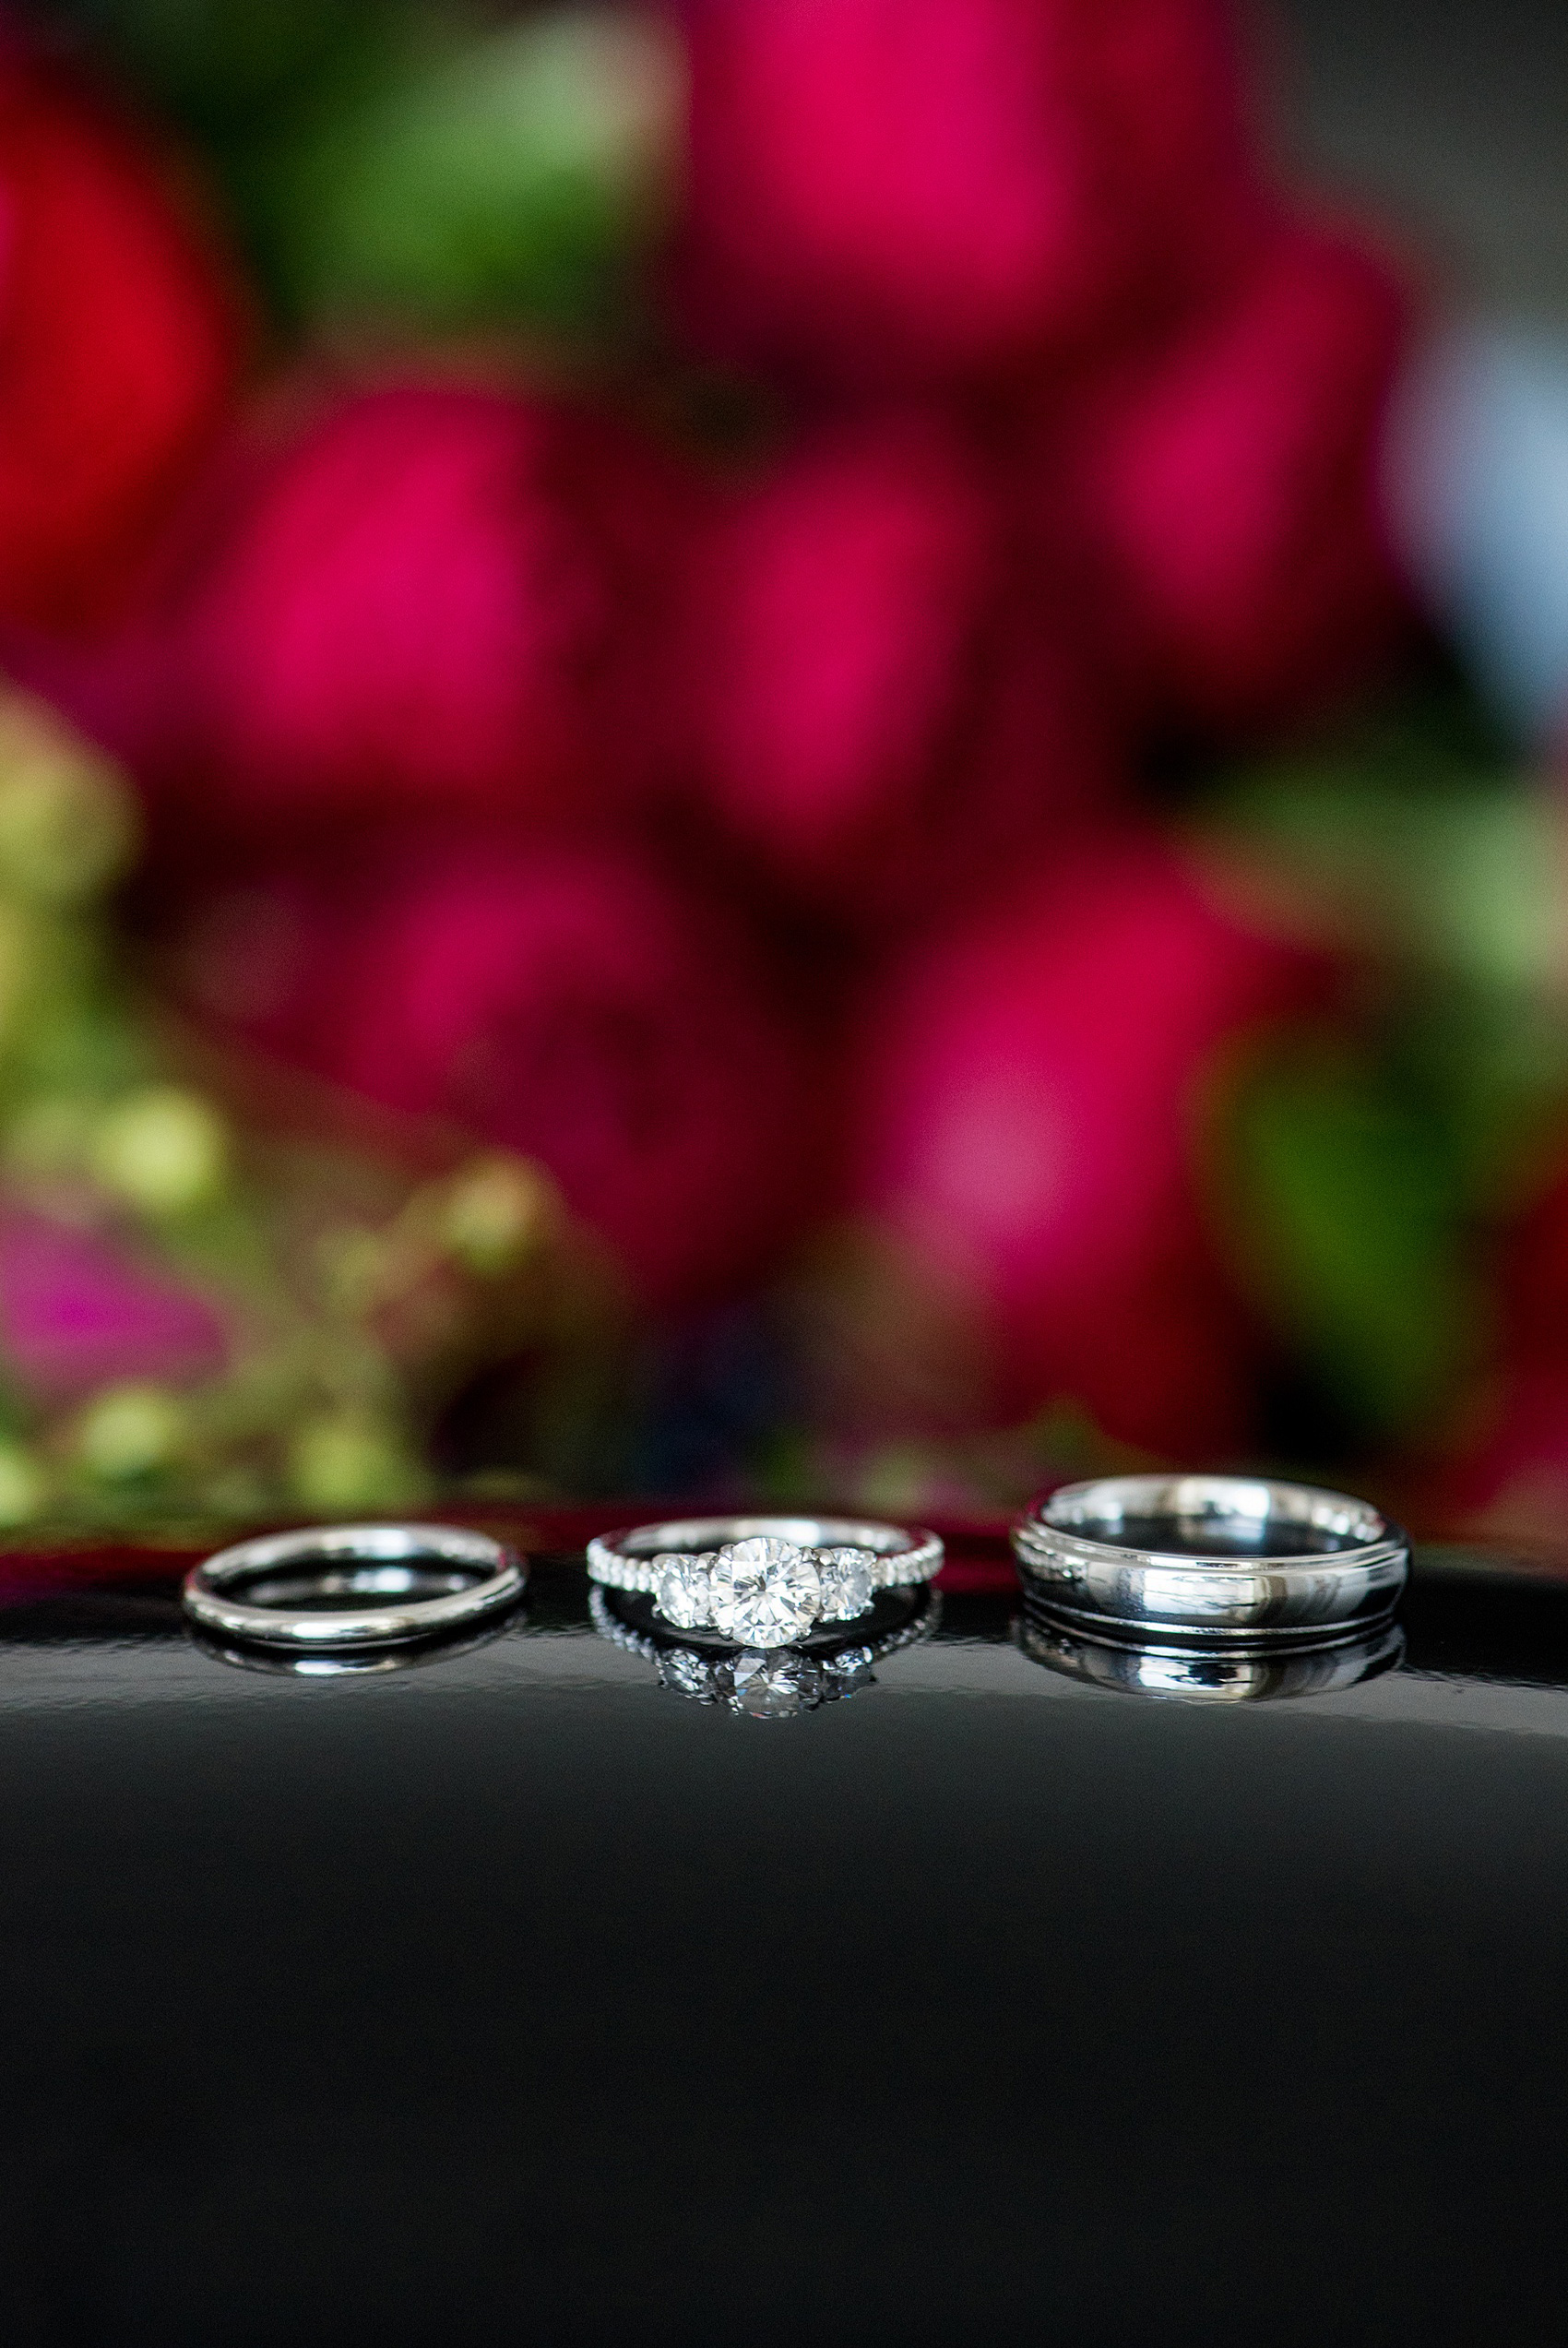 W Hoboken wedding photos by Mikkel Paige Photography. Picture of the bride and groom's white gold and diamond rings. #mikkelpaige #HobokenWedding #NewJerseyPhotographer #NewYorkCityPhotographer #NYCweddingphotographer #brideandgroomphotos #redpeonies #romanticwedding #springwedding #CityWedding